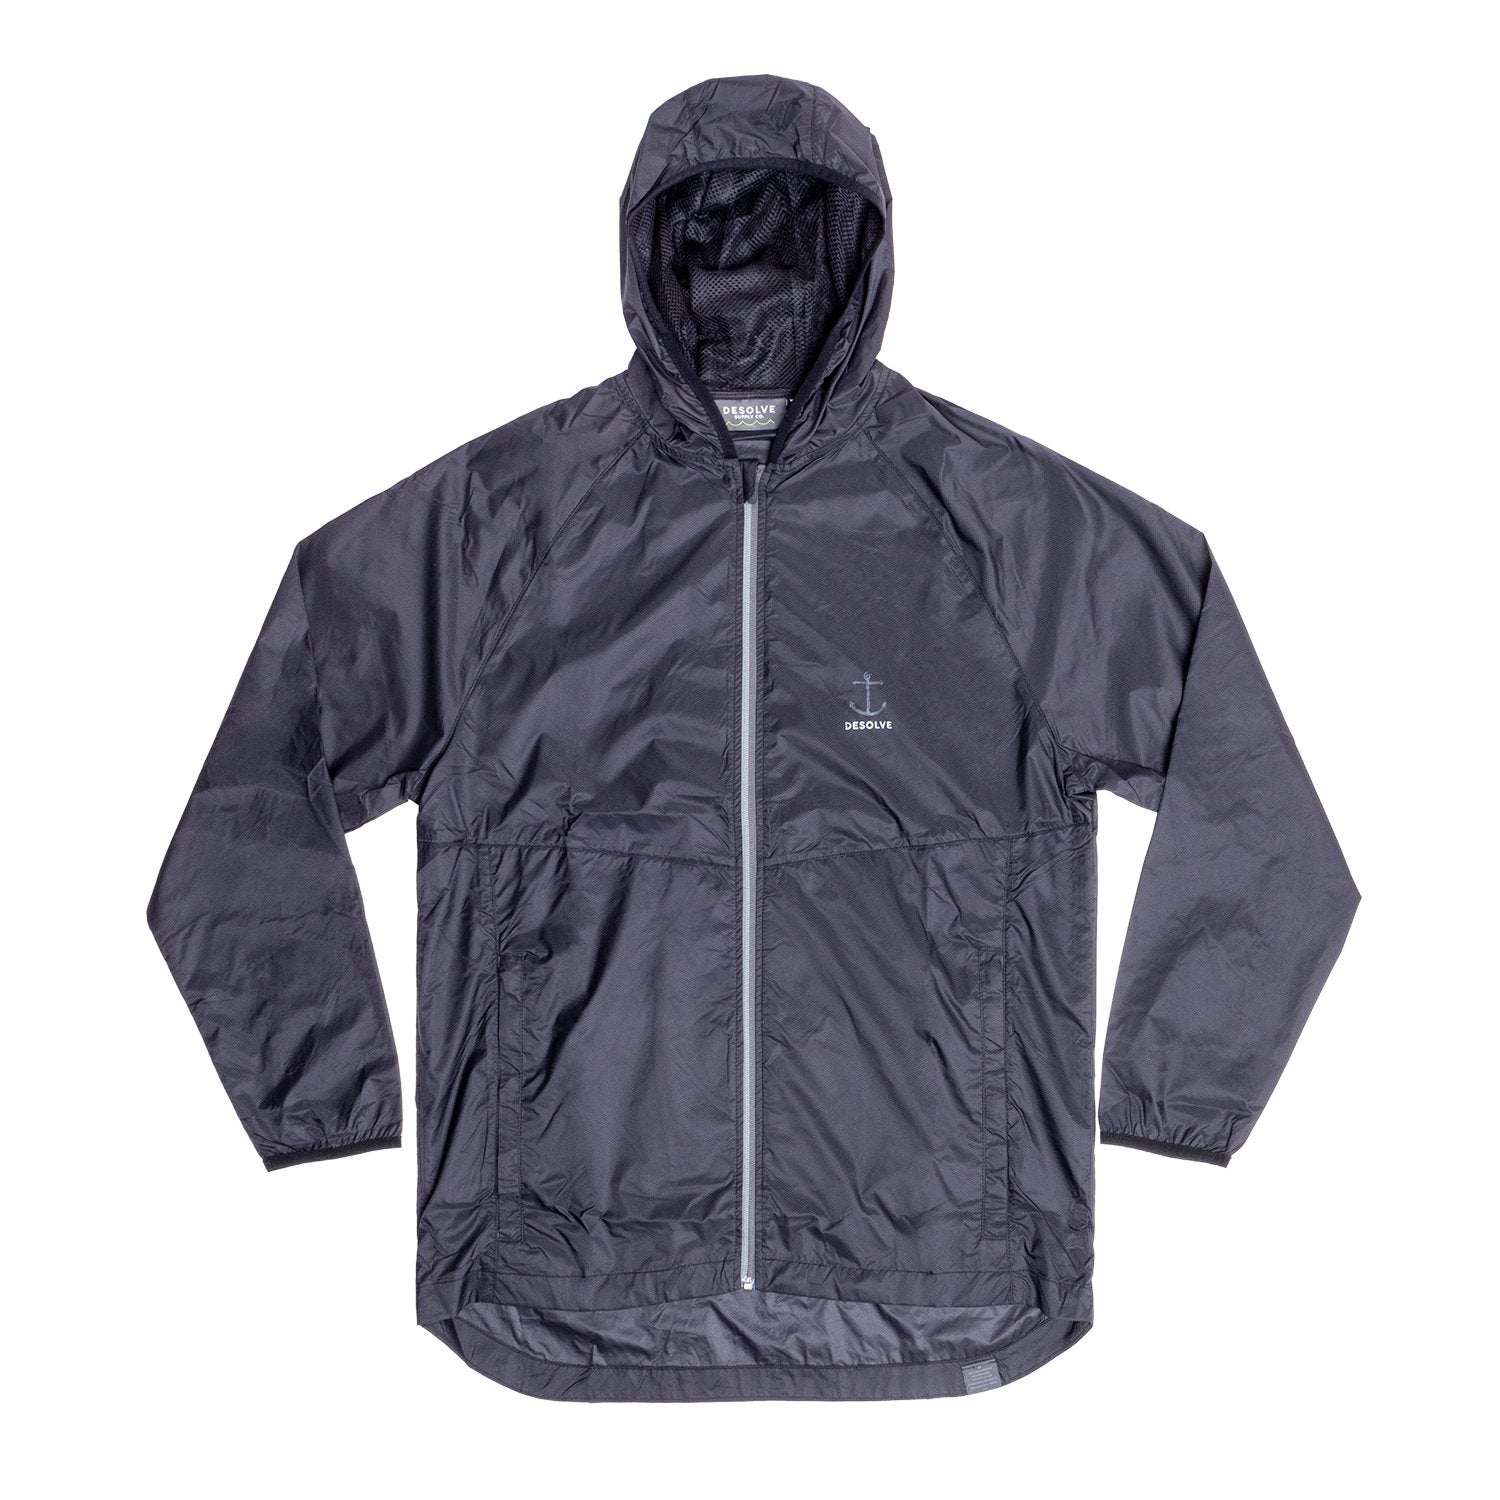 Jackets & Rainwear, Desolve Supply Co., Forever Fishing - Desolve Supply  Co.